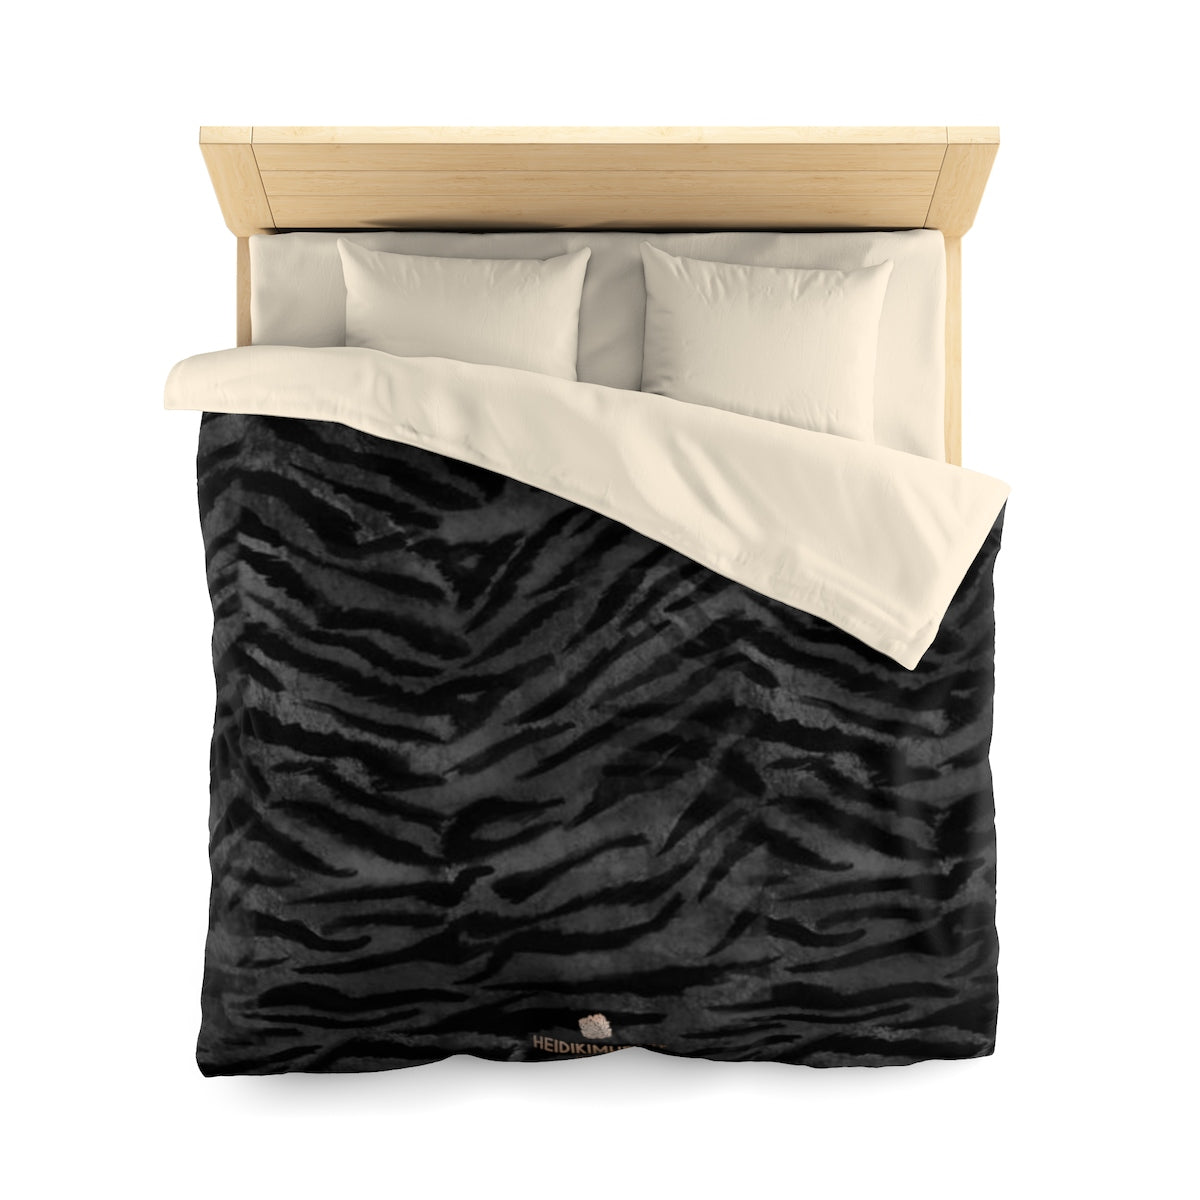 Black Tiger Stripe Duvet Cover, Gray Animal Print Queen/Twin Size Microfiber Duvet Cover-Duvet Cover-Queen-Cream-Heidi Kimura Art LLC